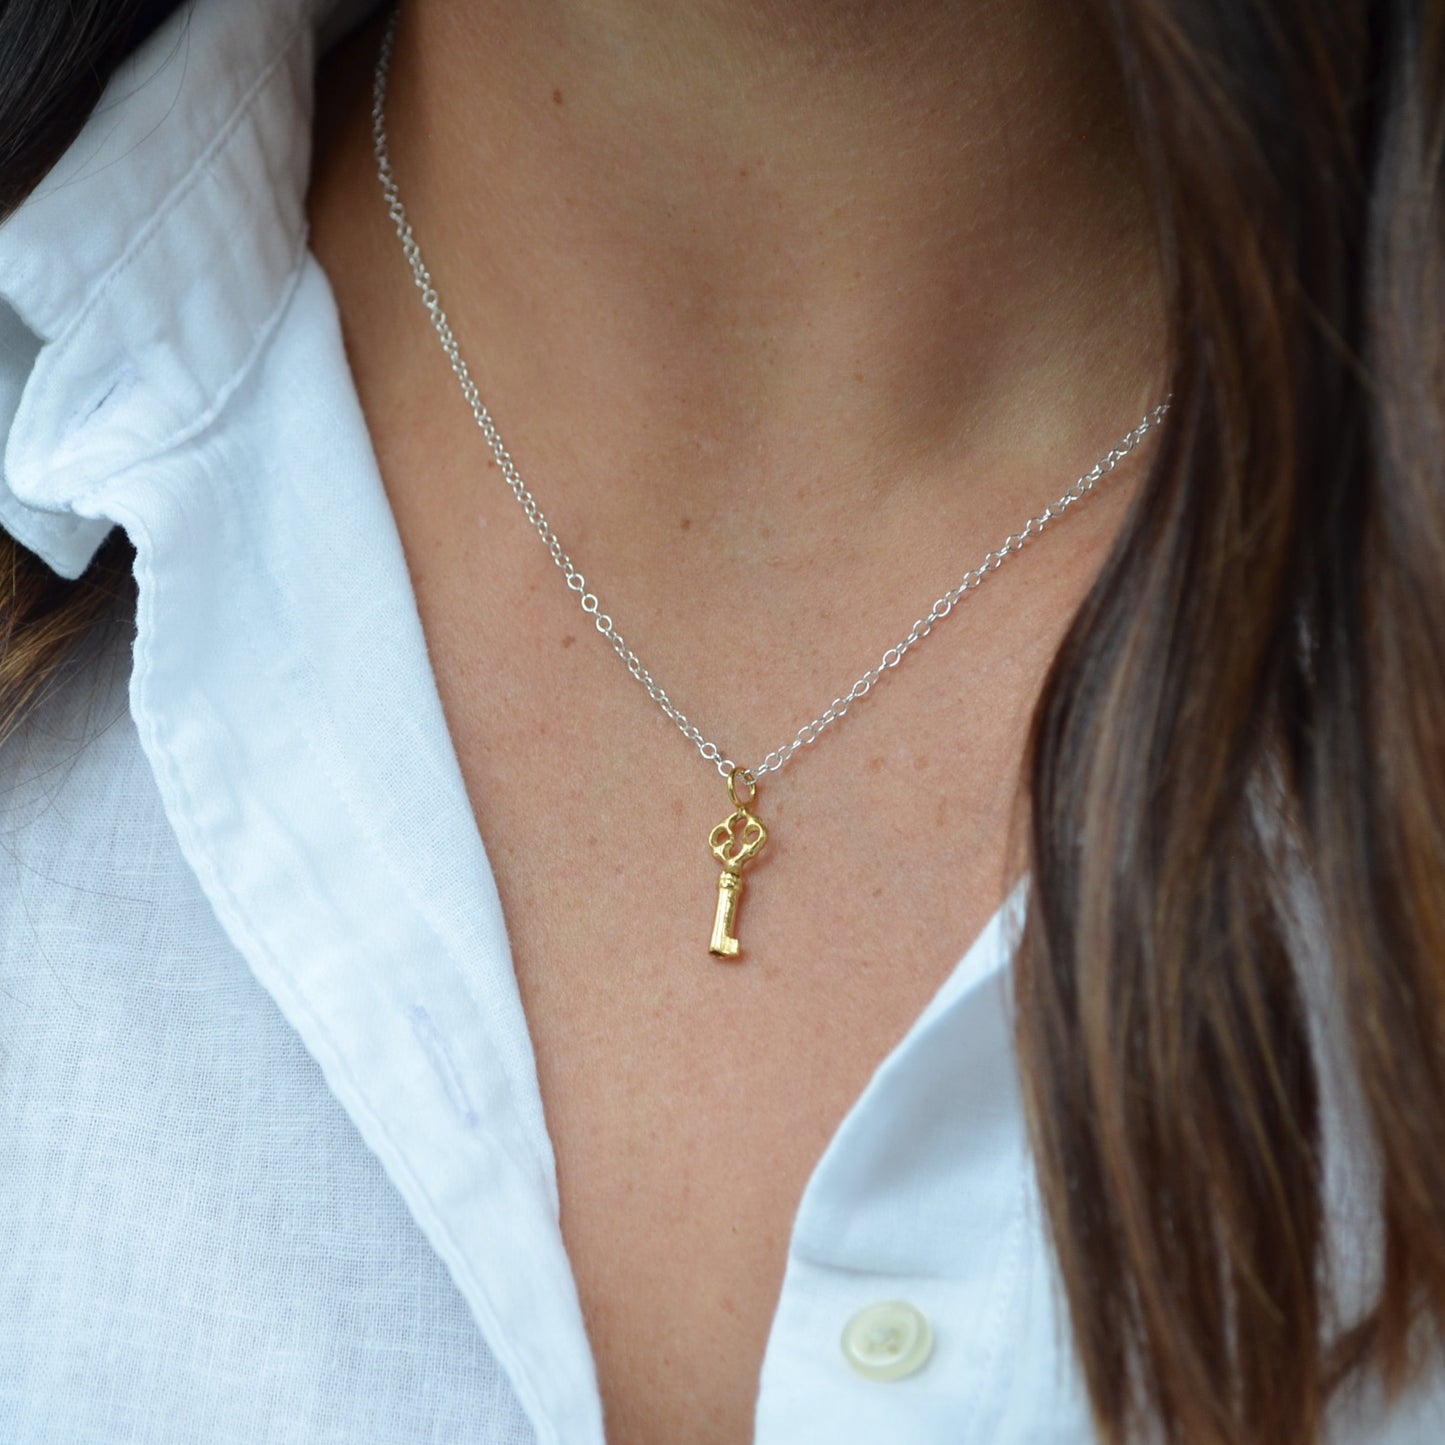 Zoe-sembi-jewellery-gold-key-necklace